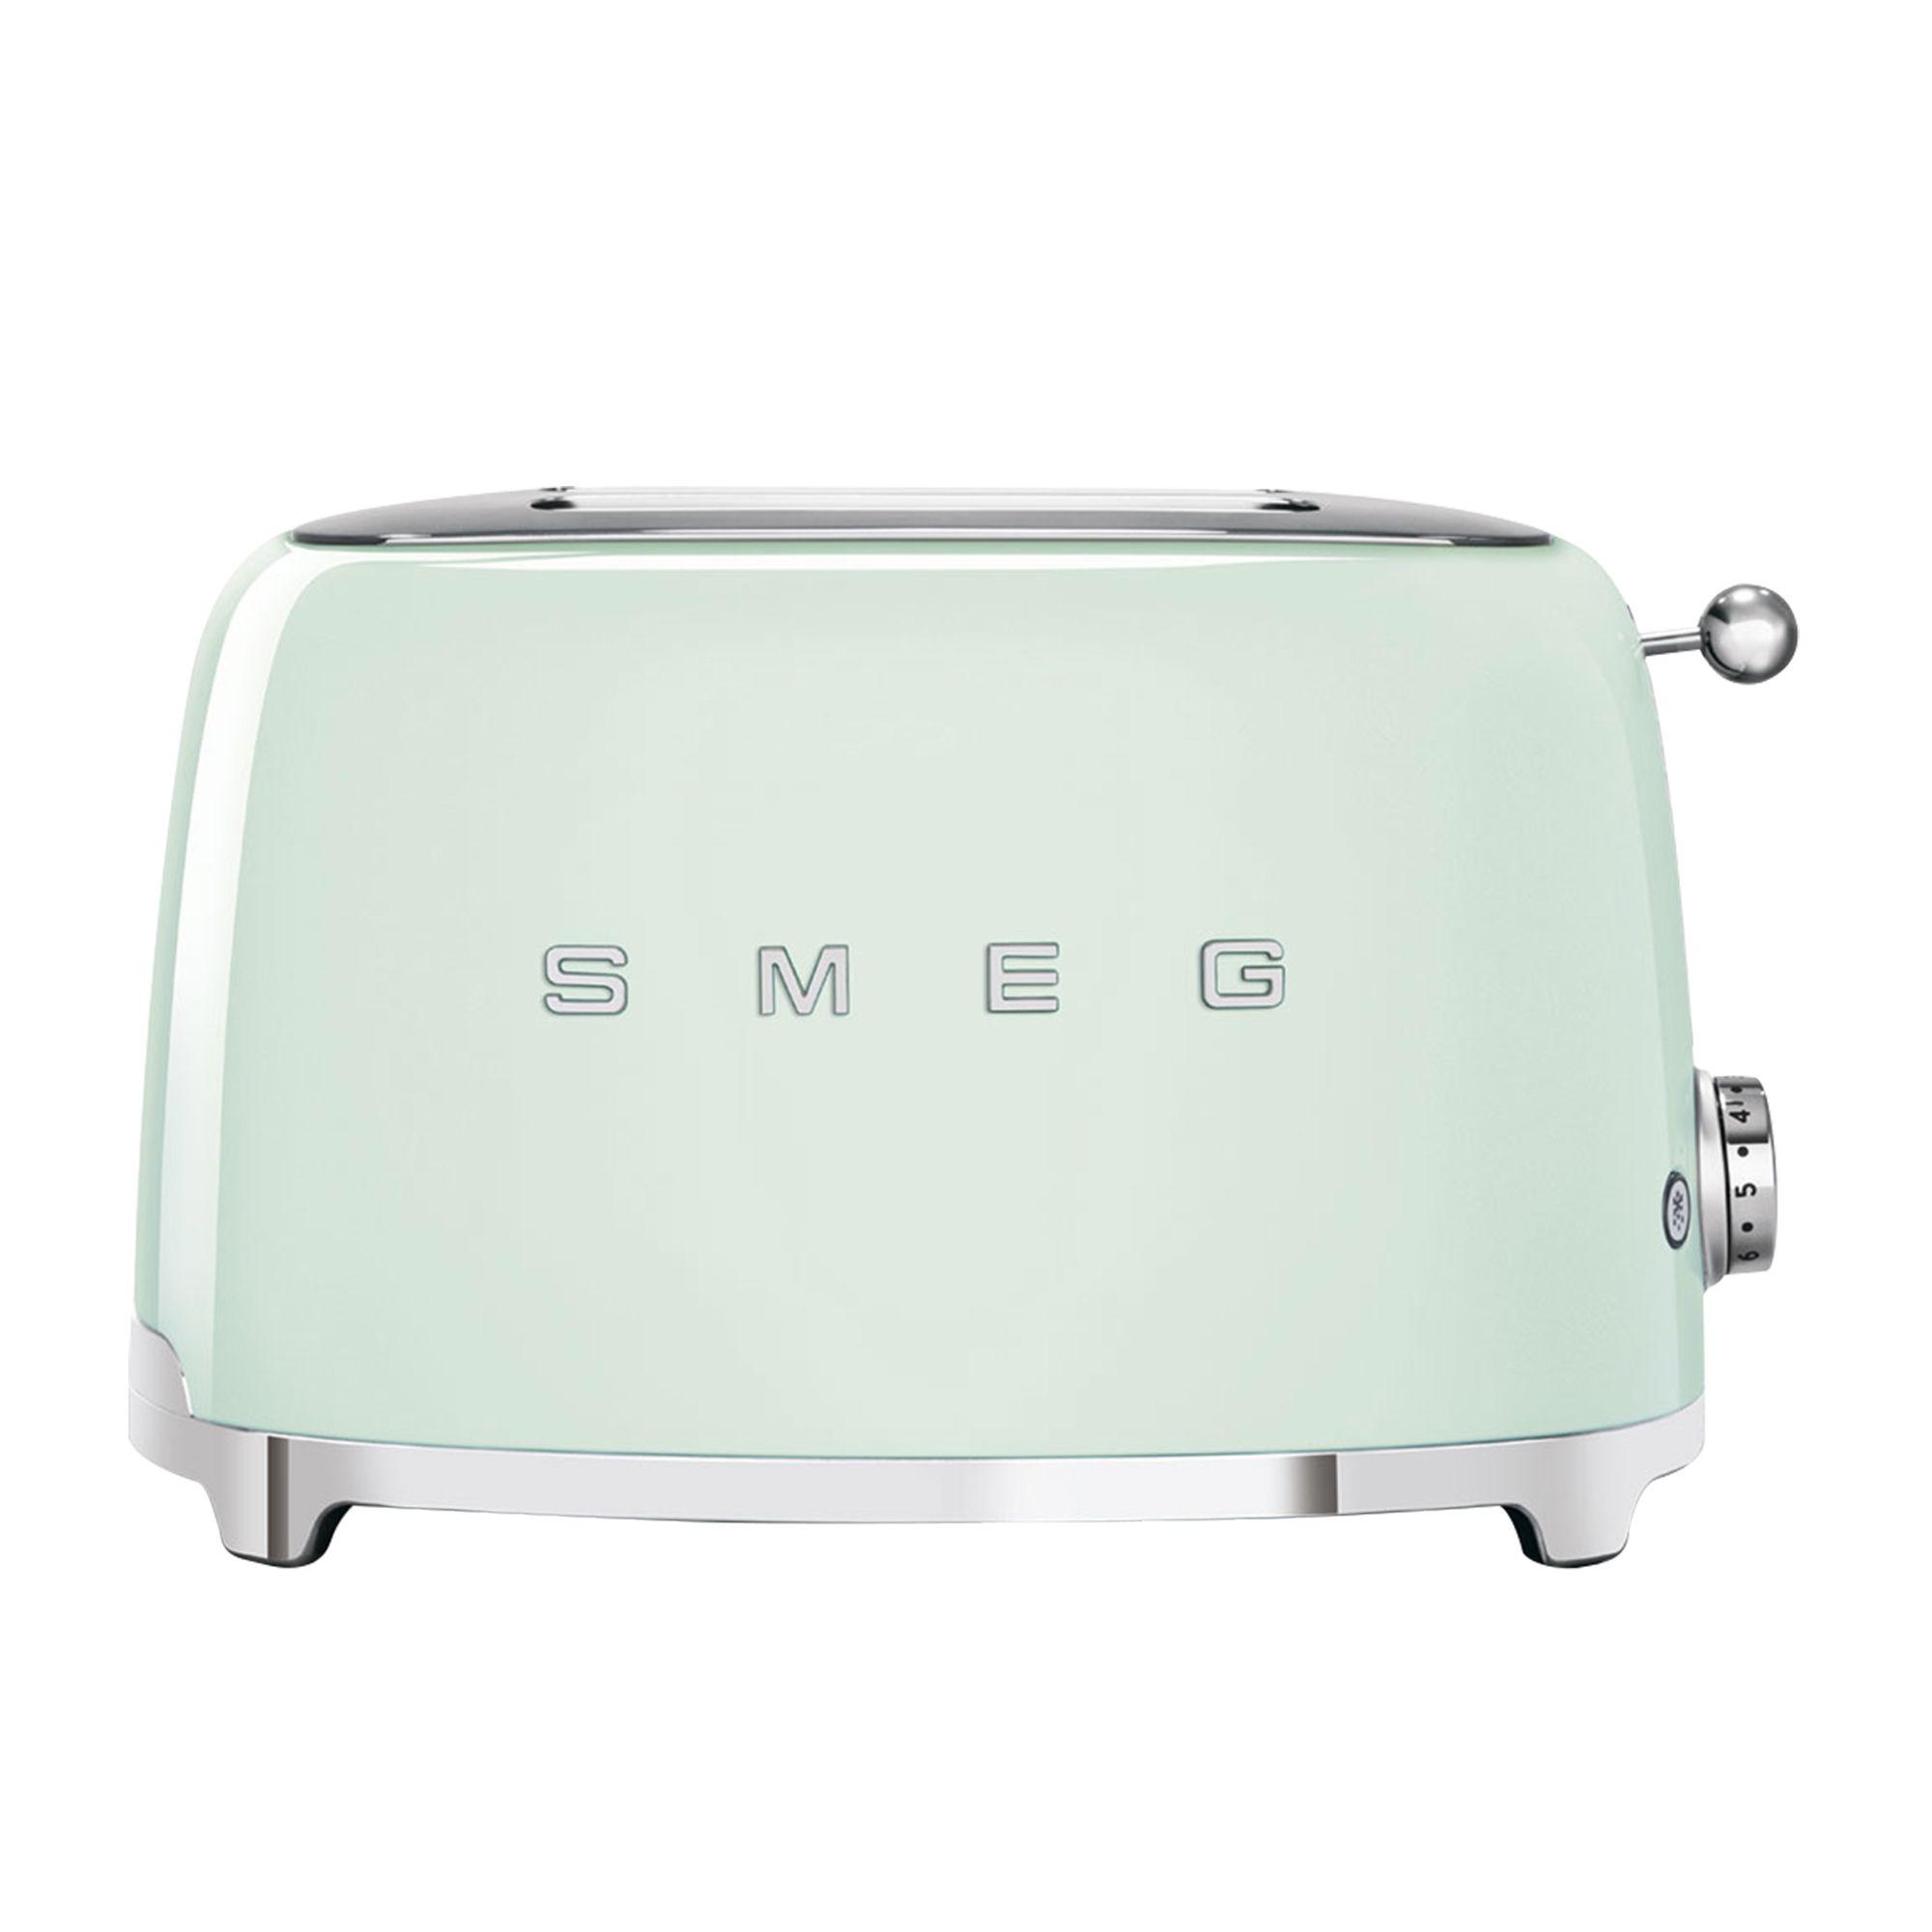 Smeg 50's Retro Style 2 Slice Toaster Pastel Green Image 4